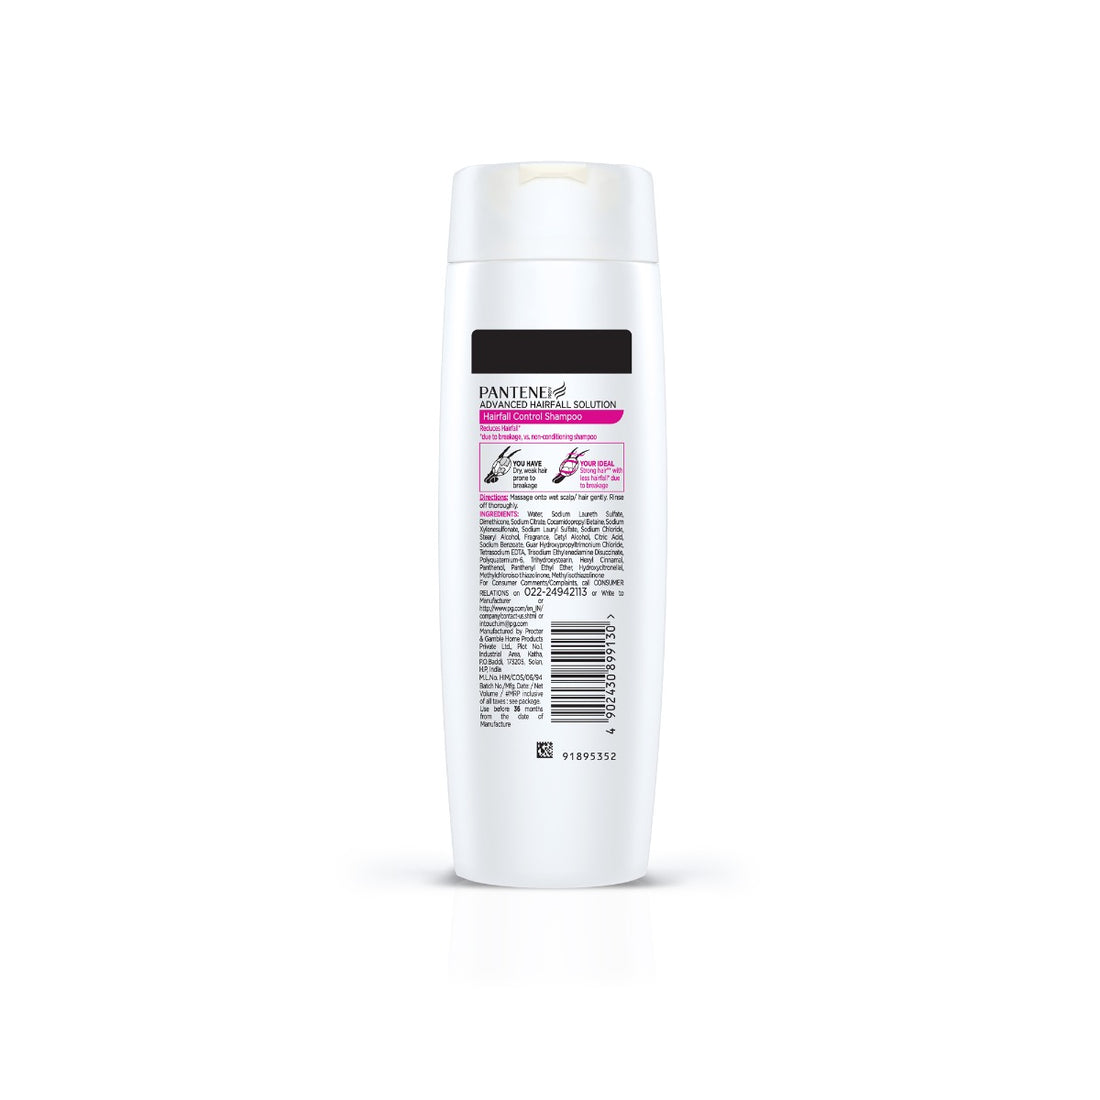 Pantene Advanced Hairfall Solution Anti-Hairfall Shampoo for Women (340ml)